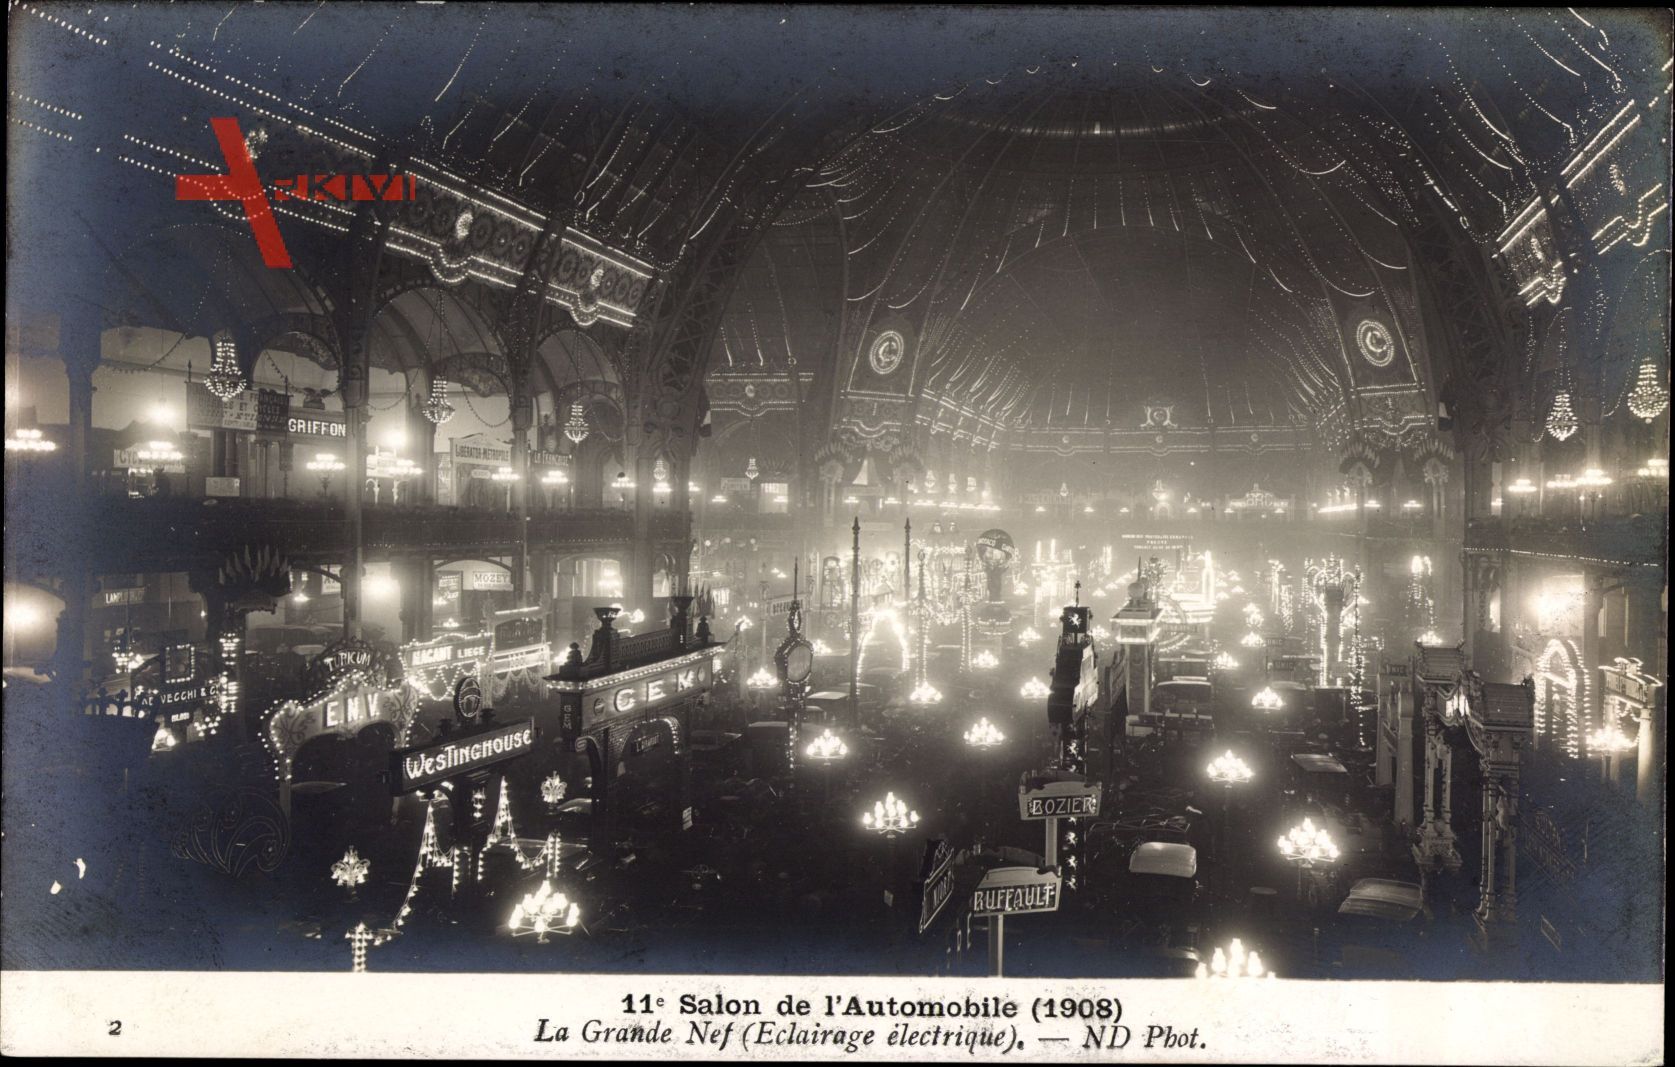 Salon de lAutomobile 1908, Grande Nef, Illumination, Autoausstellung,Lichter